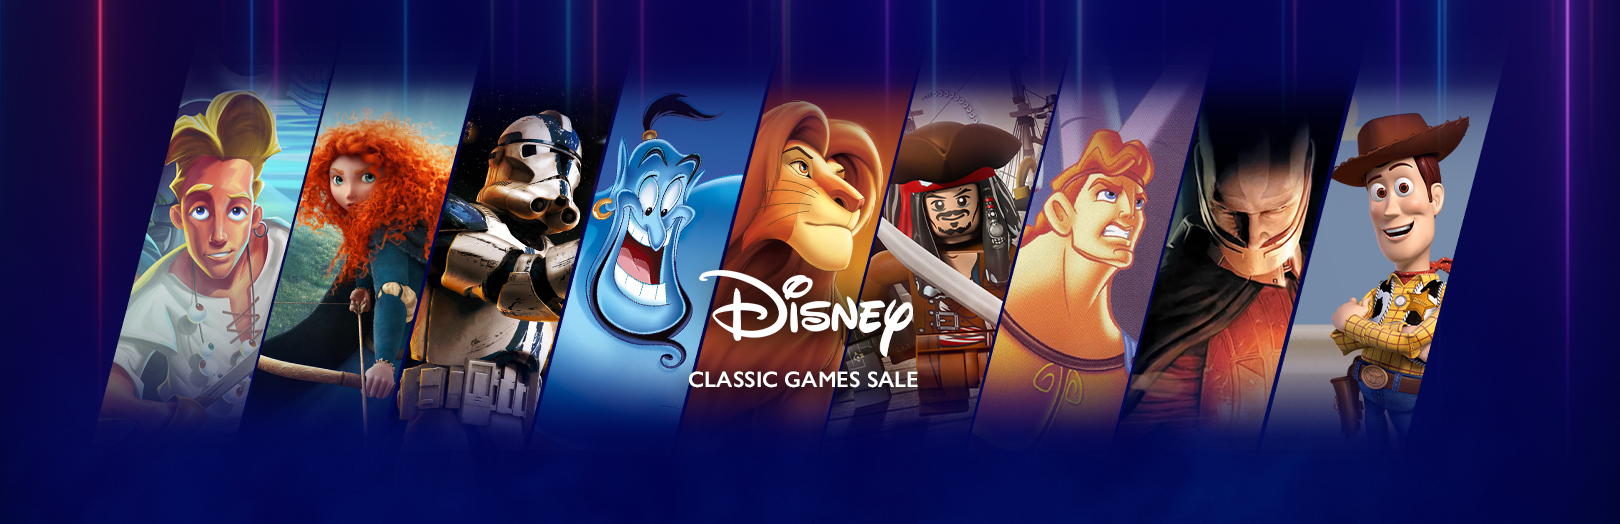 Disney Classic Games Sale